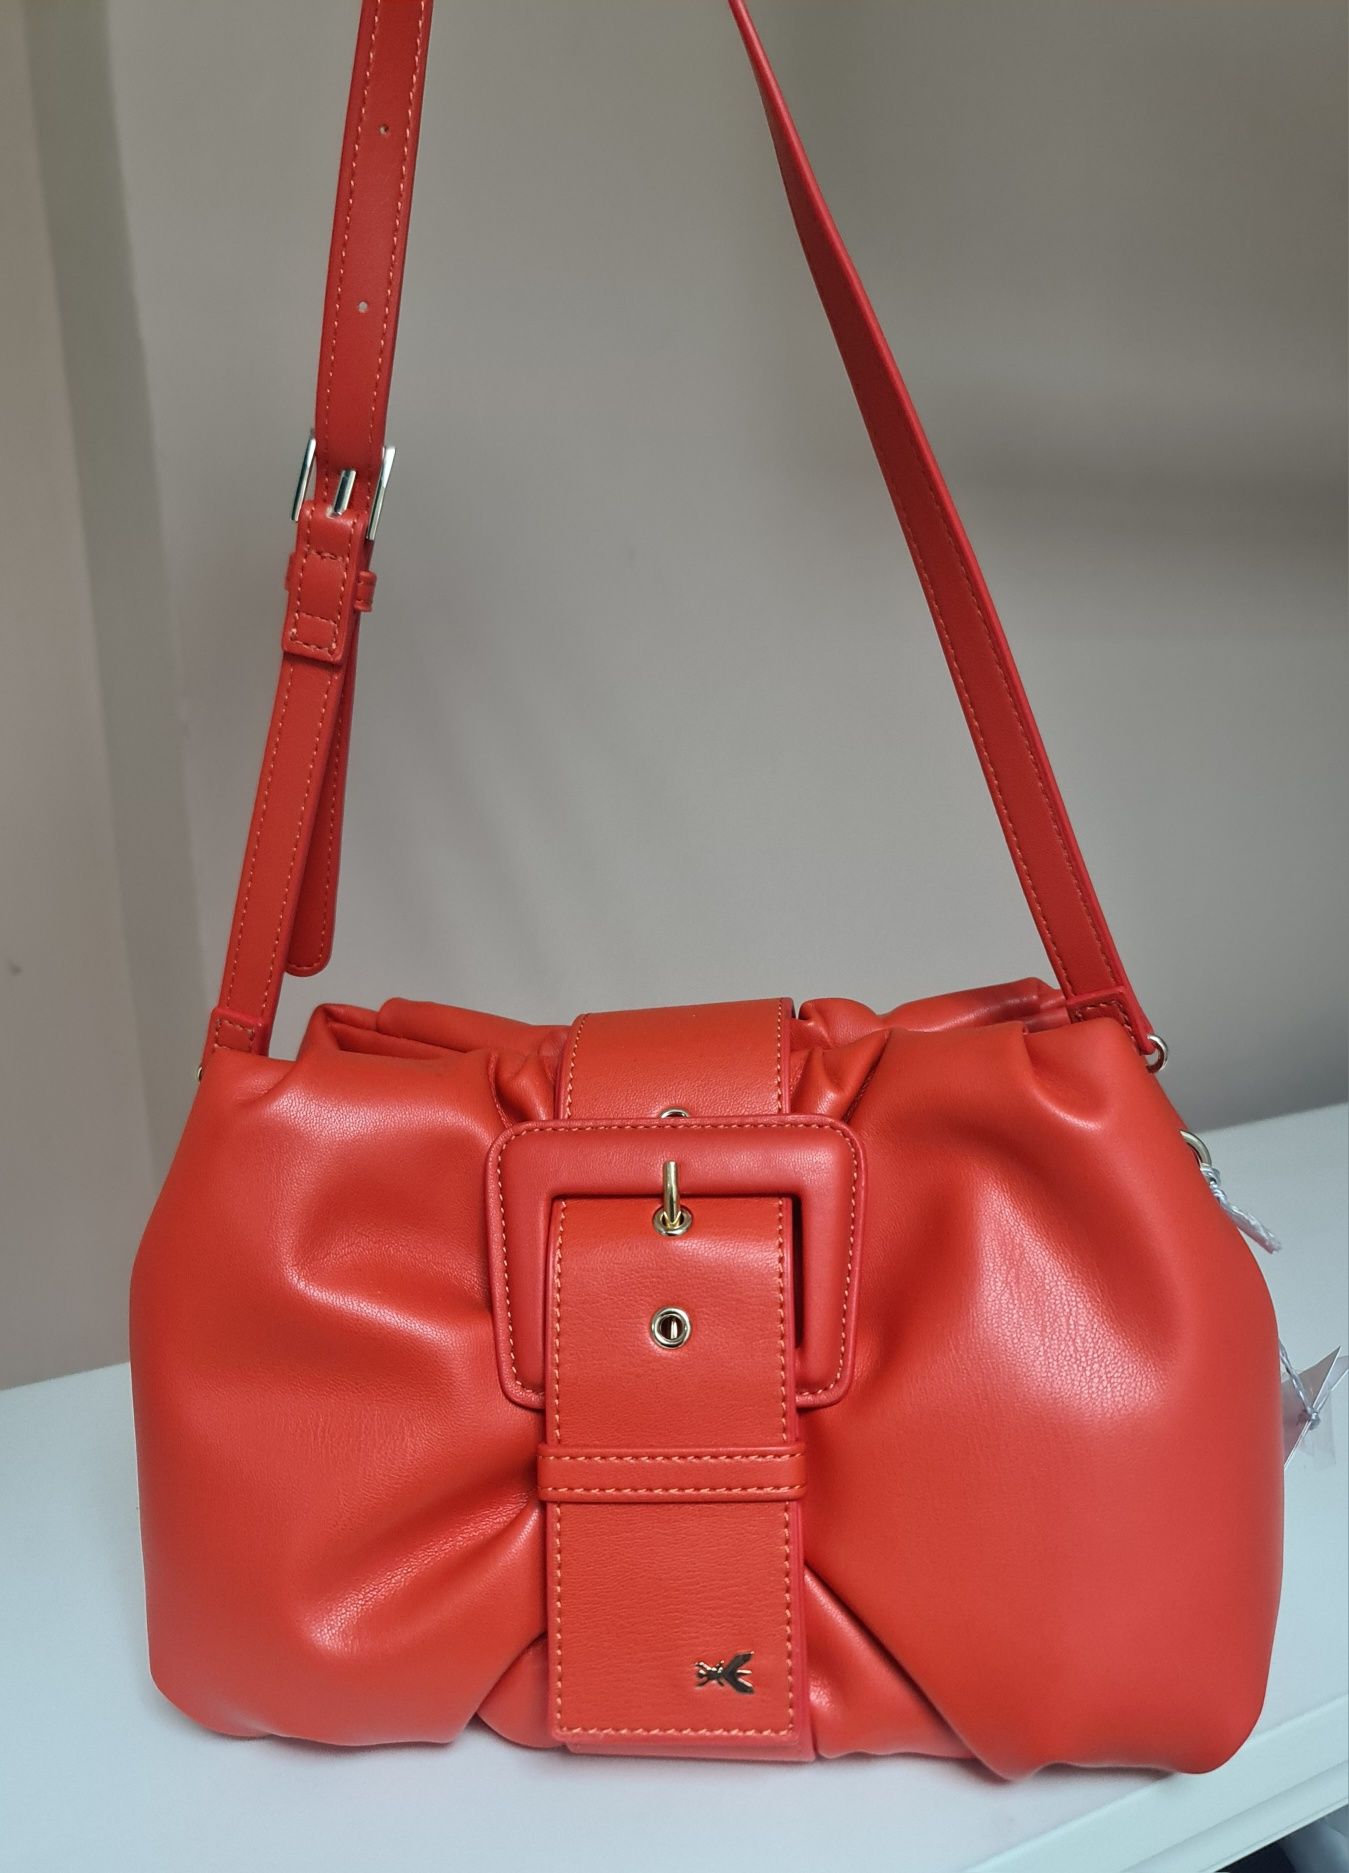 Чанта PatriziaPepe, soft модел, най-нова !